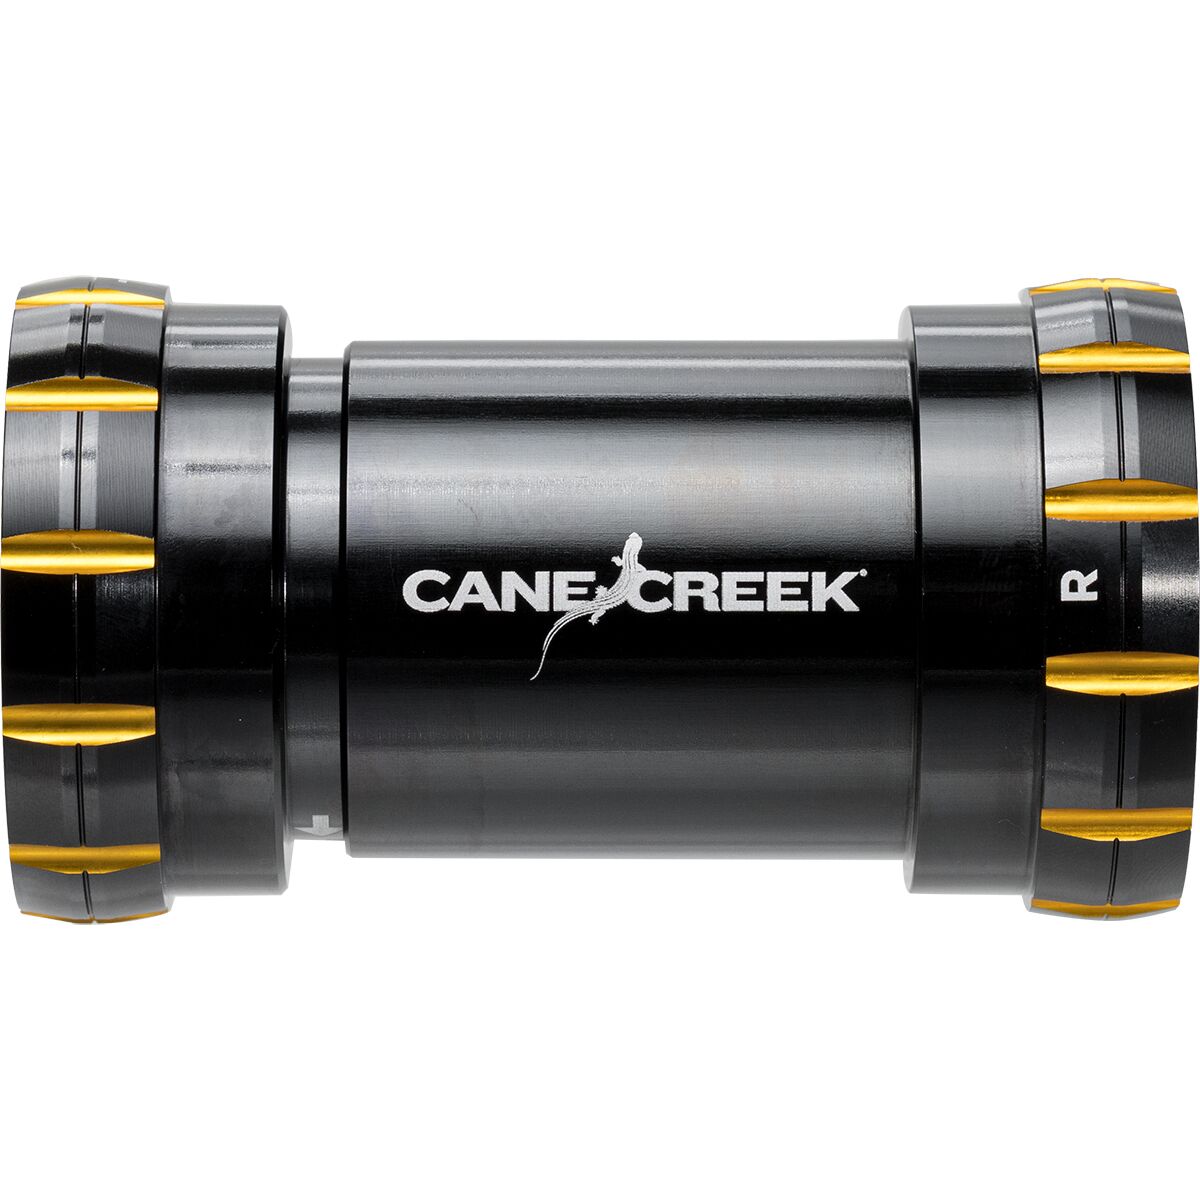 Cane Creek Hellbender 70 BB30 24mm Bottom Bracket